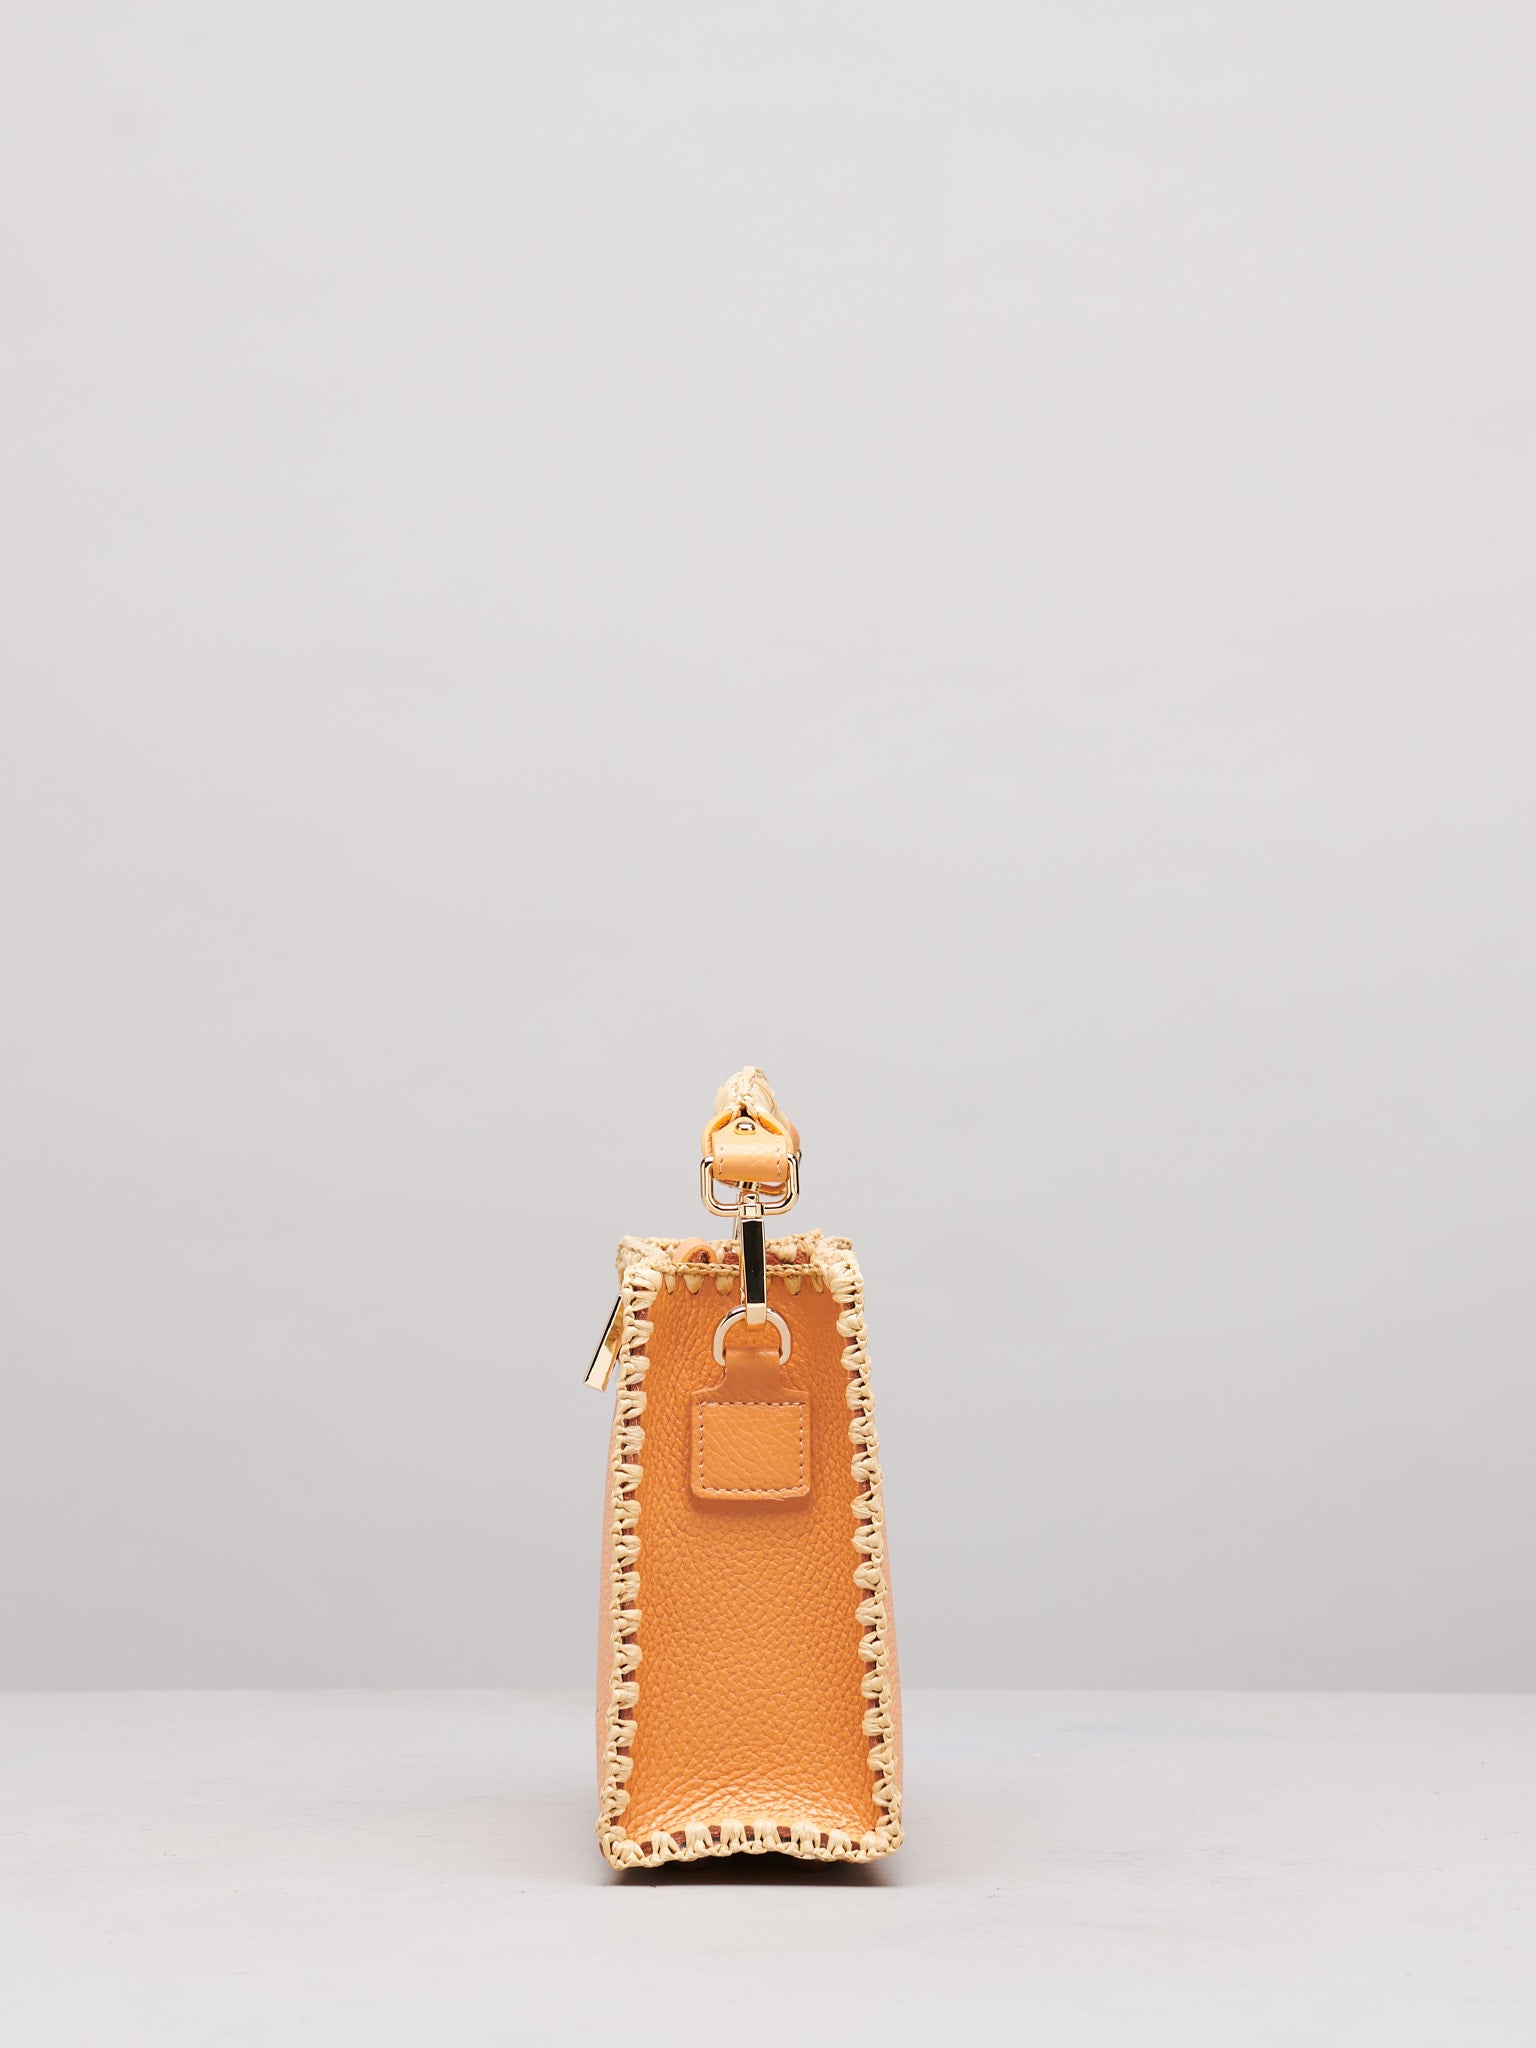 Sylvia Small Soft Orange Handbag